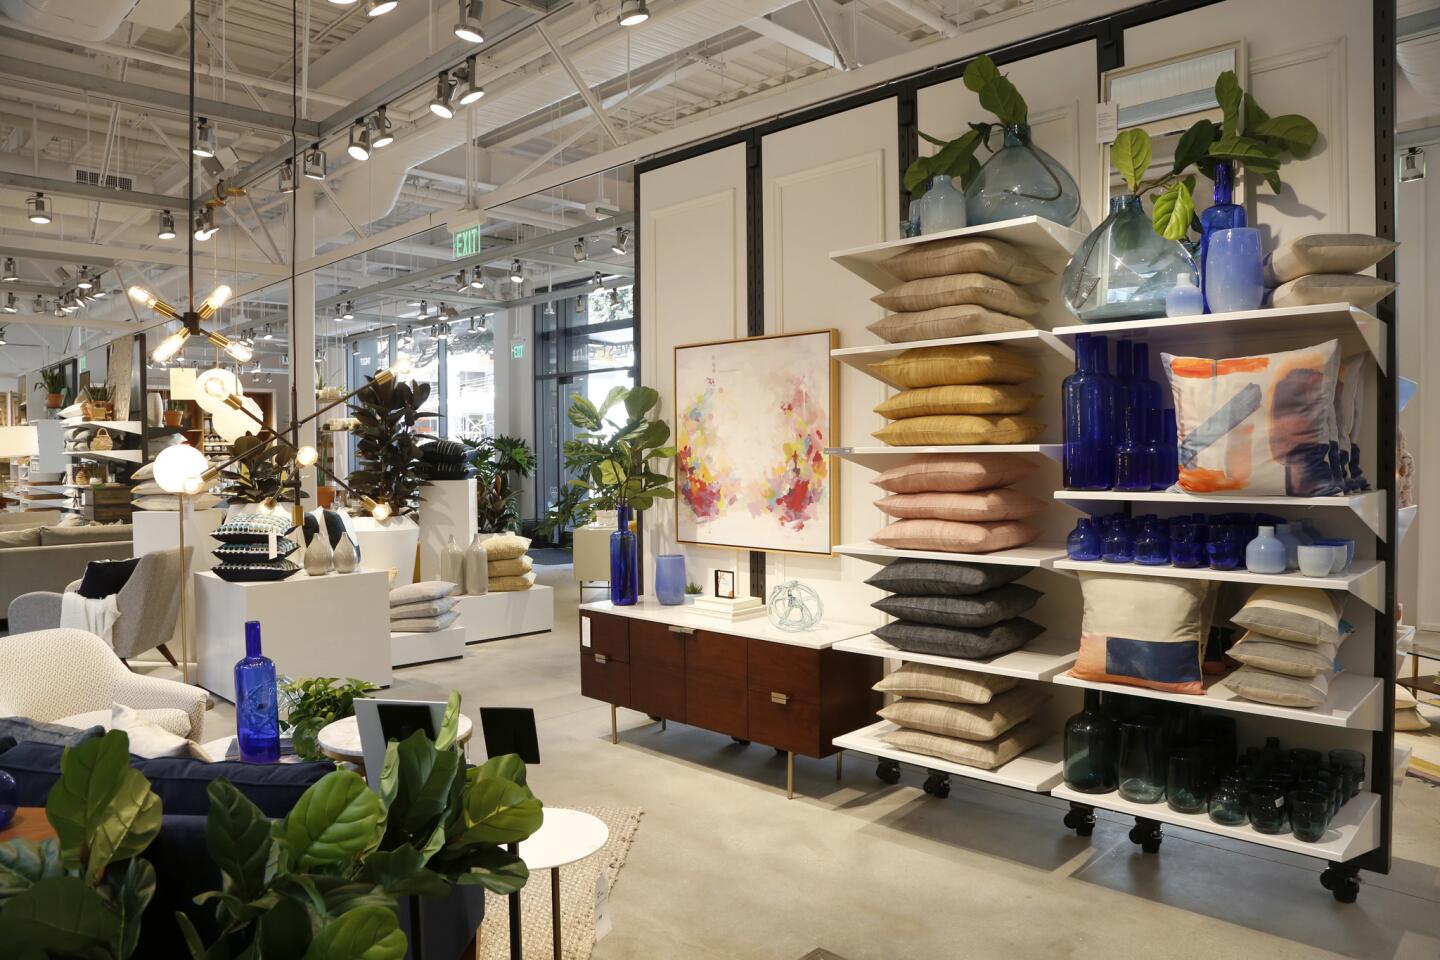 West Elm Santa Monica debuts new concept store that showcases